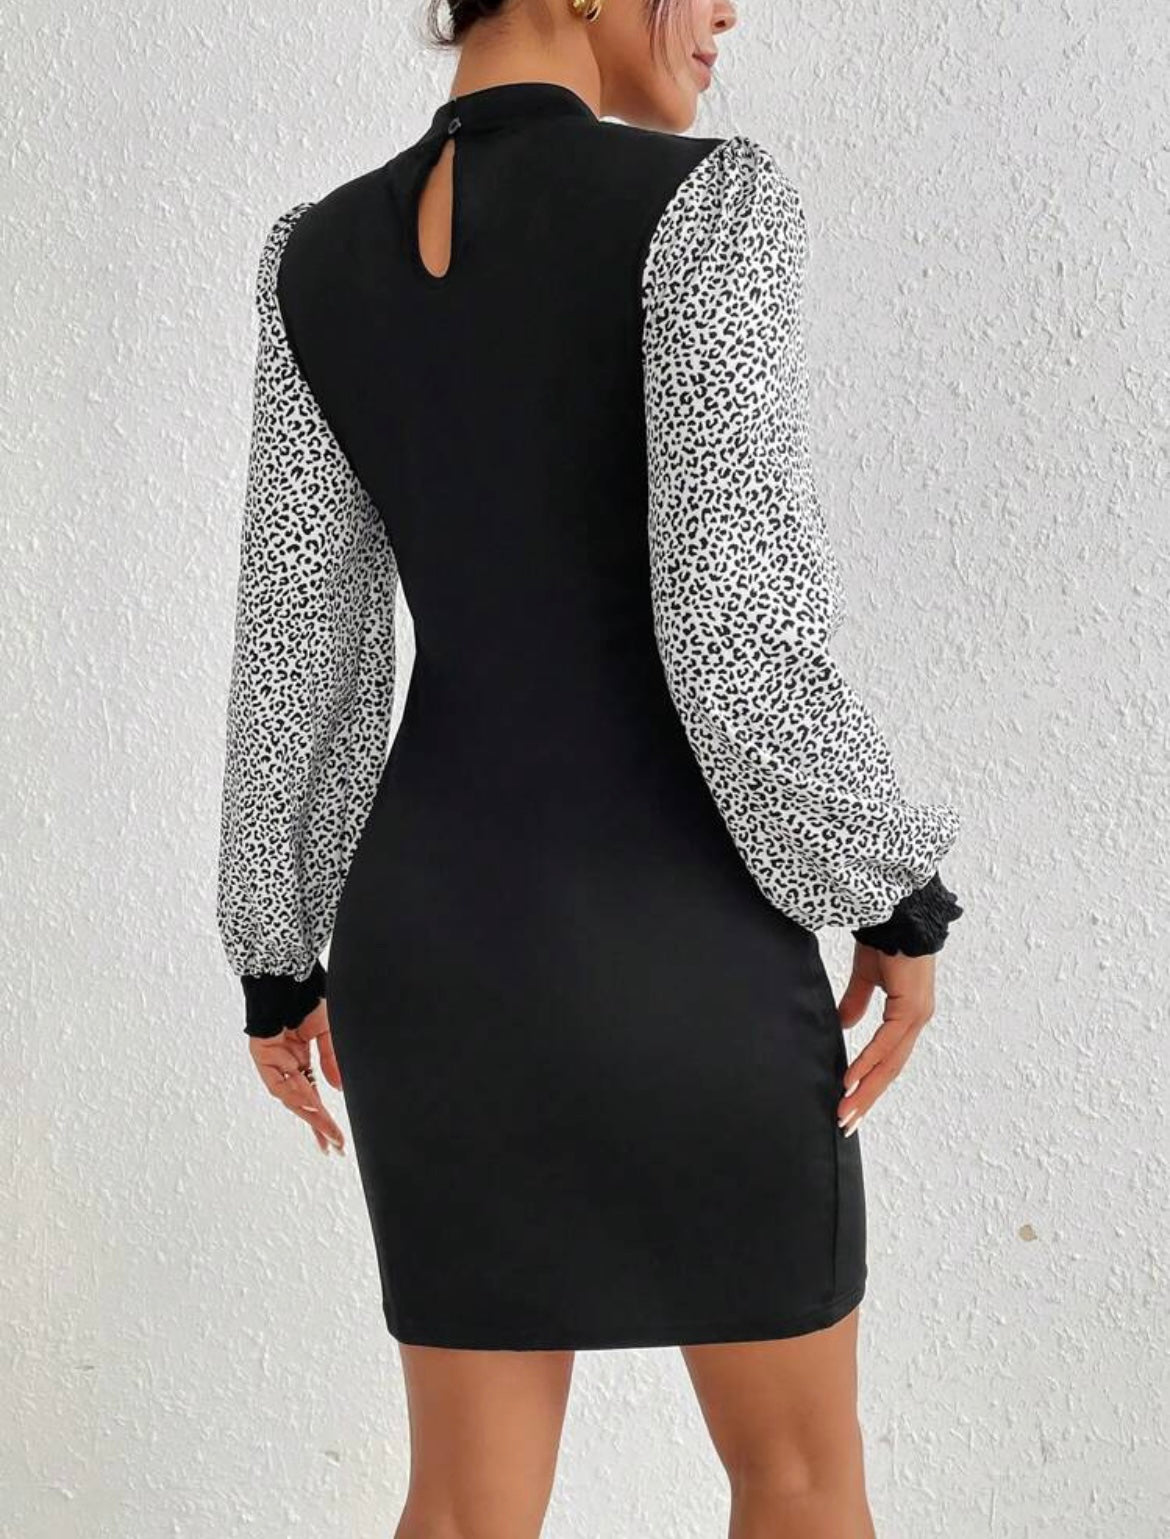 Leopard Sleeve Dress - Black